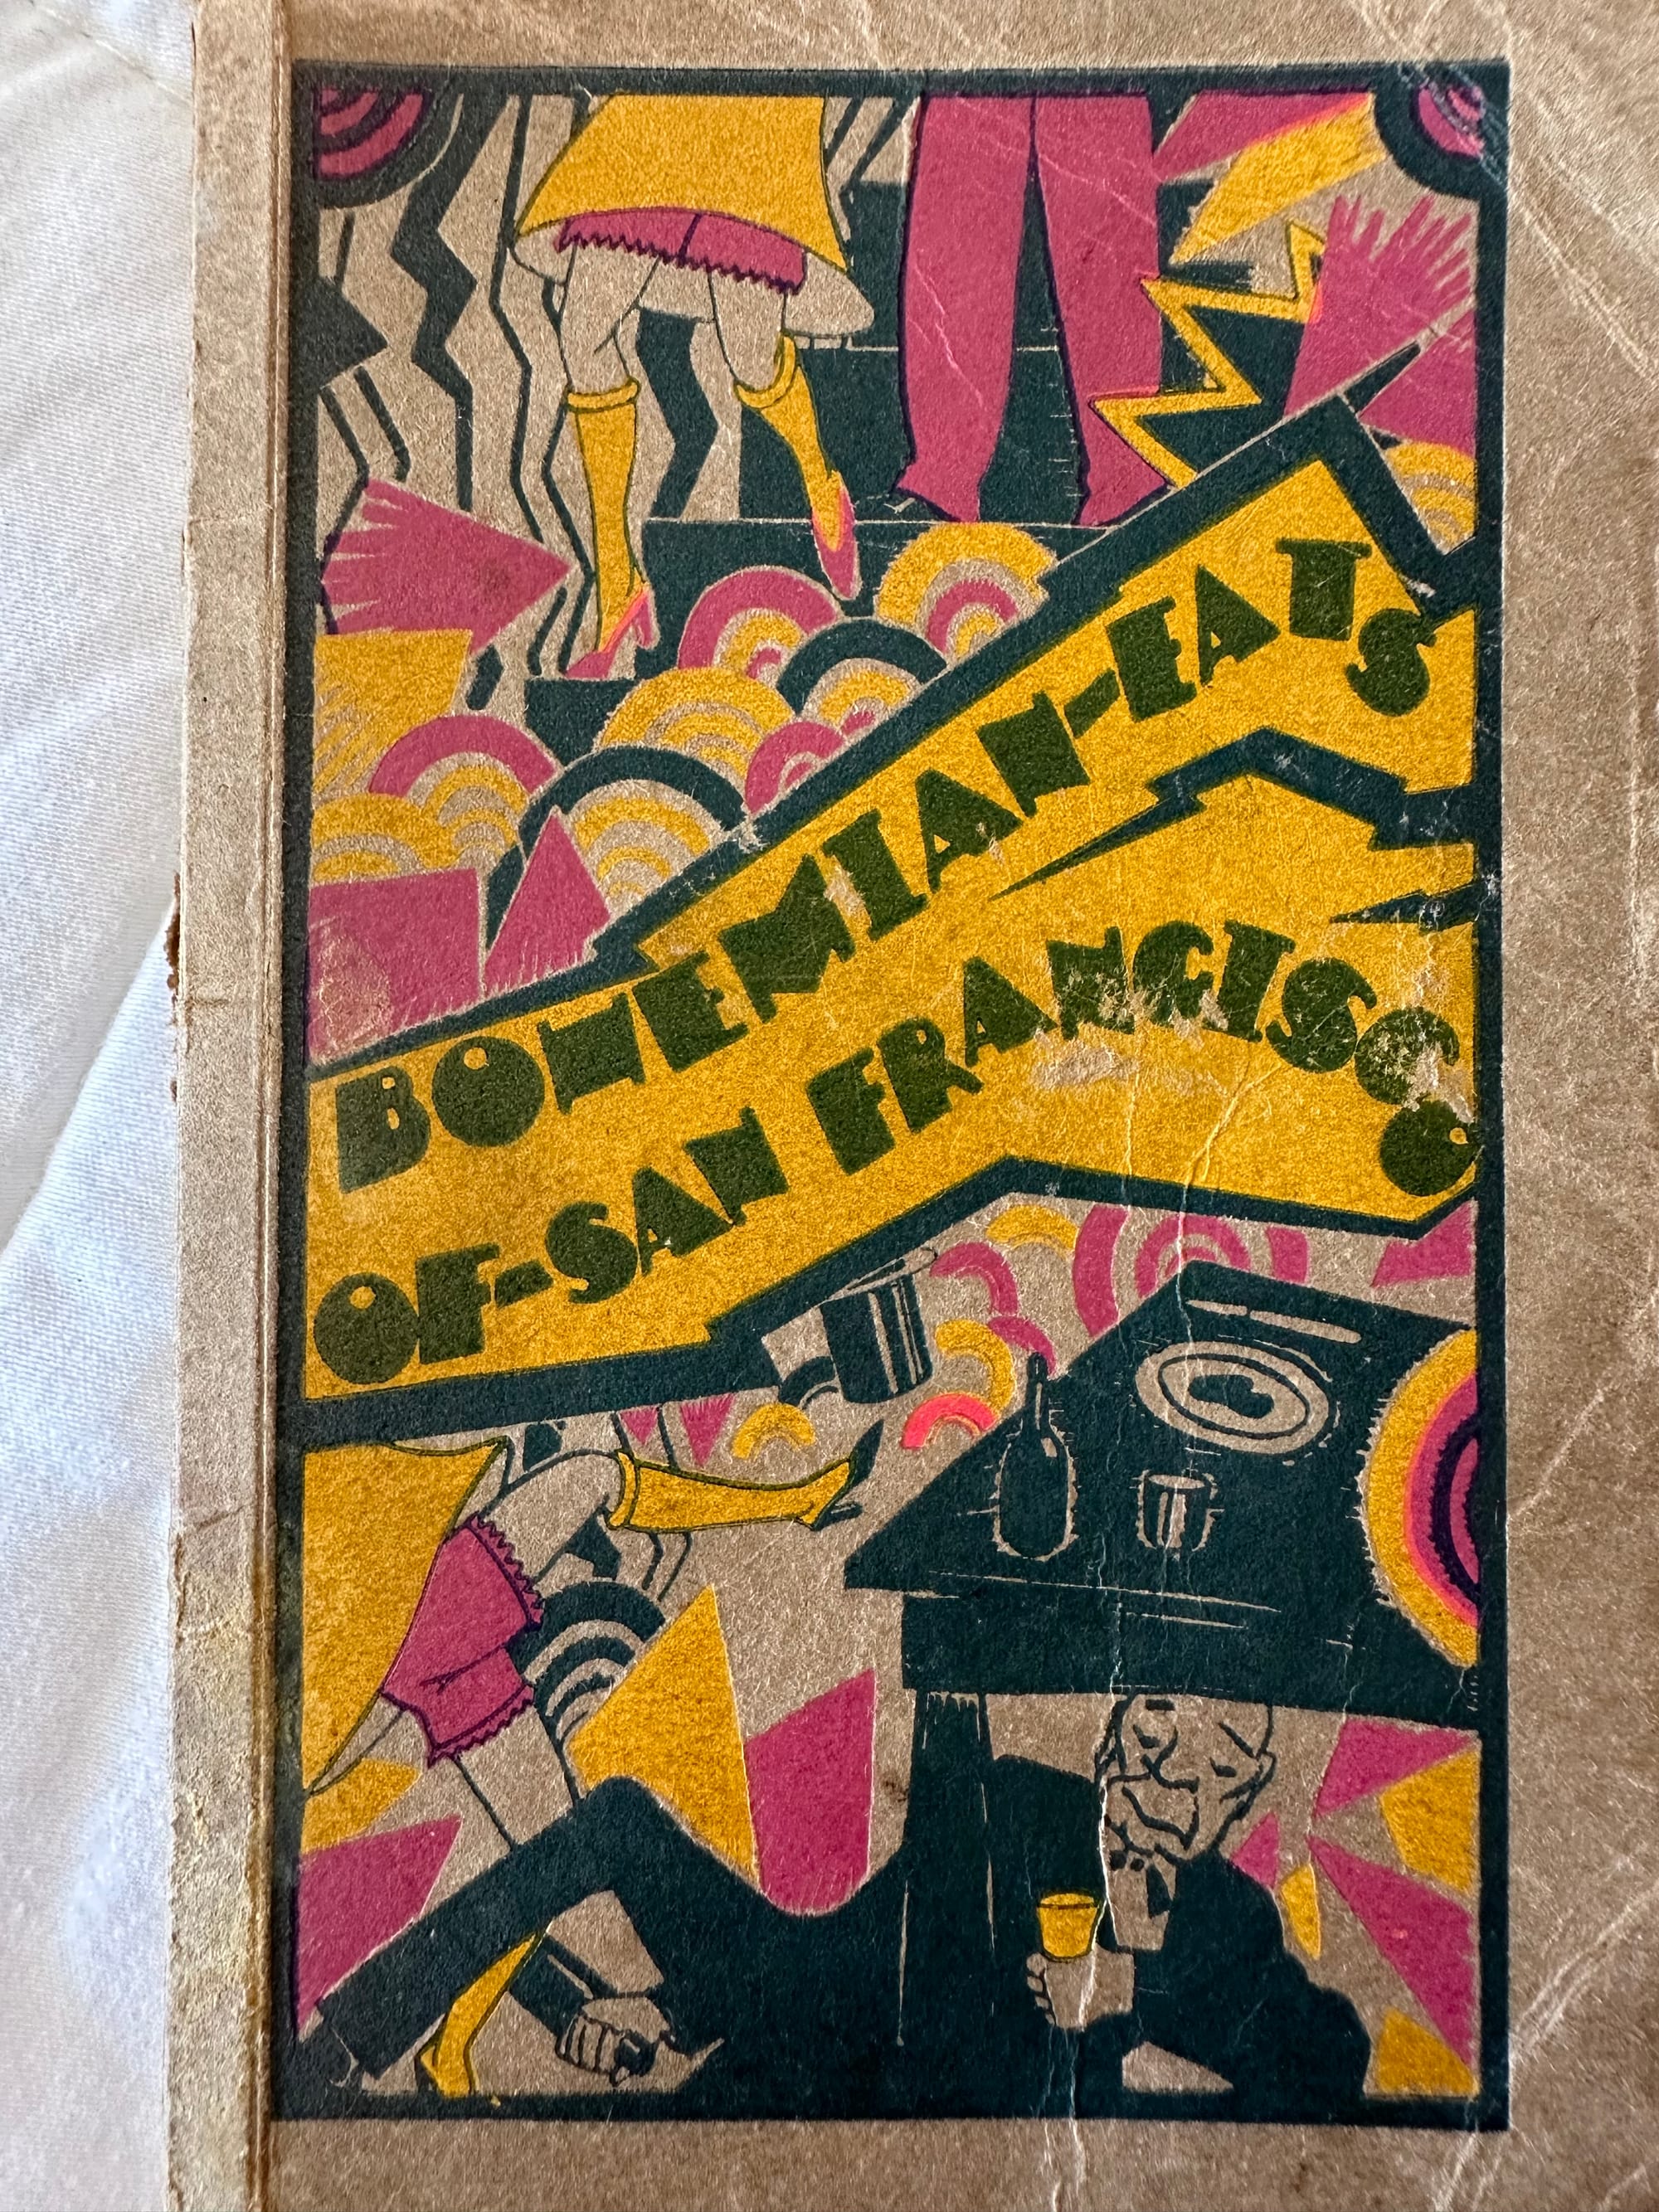 One of my favorite vintage San Francisco restaurant guidebooks: Bohemian Eats of San Francisco.